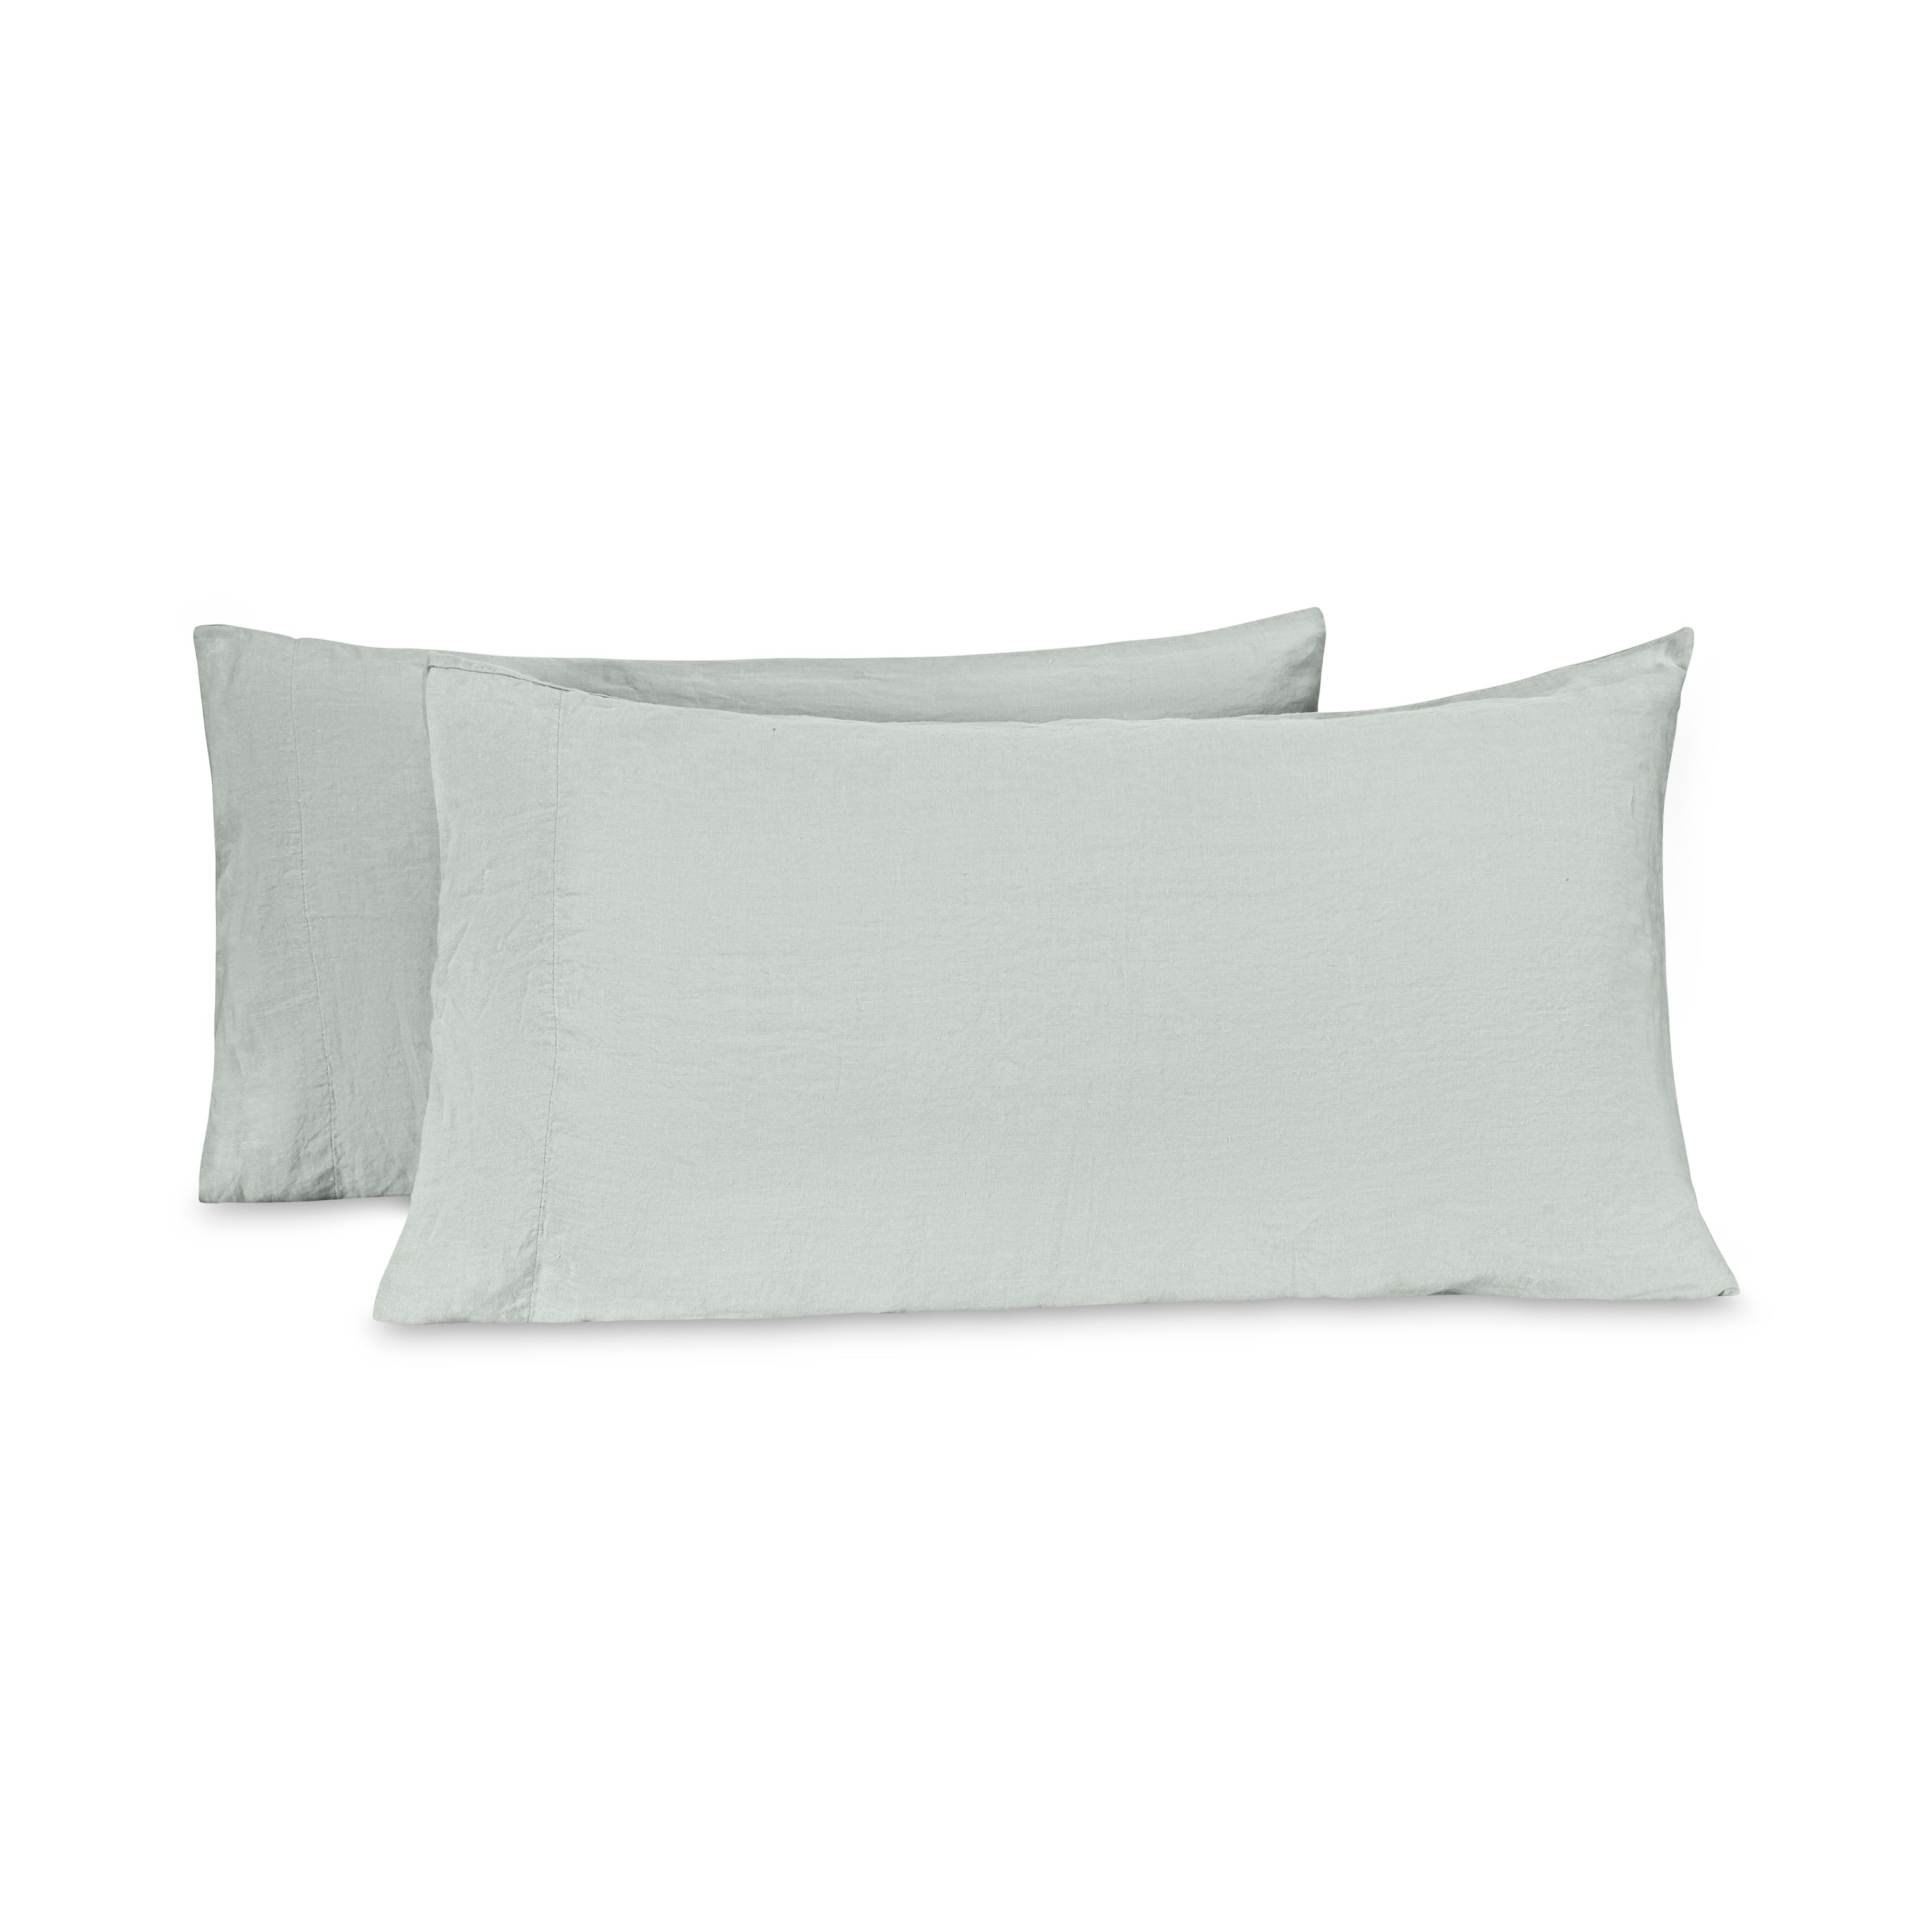 100% Organic Hemp Pillow Cases (Twin Pack)